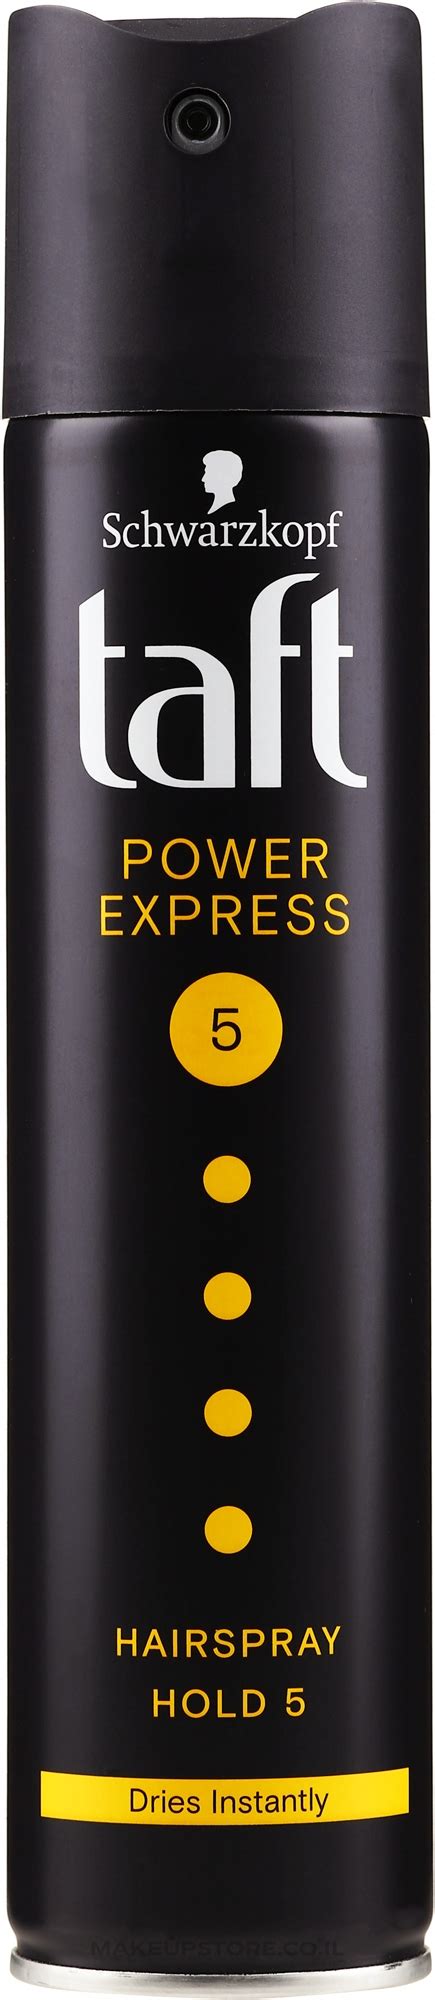 schwarzkopf taft power express mega strong 5 hair spray il